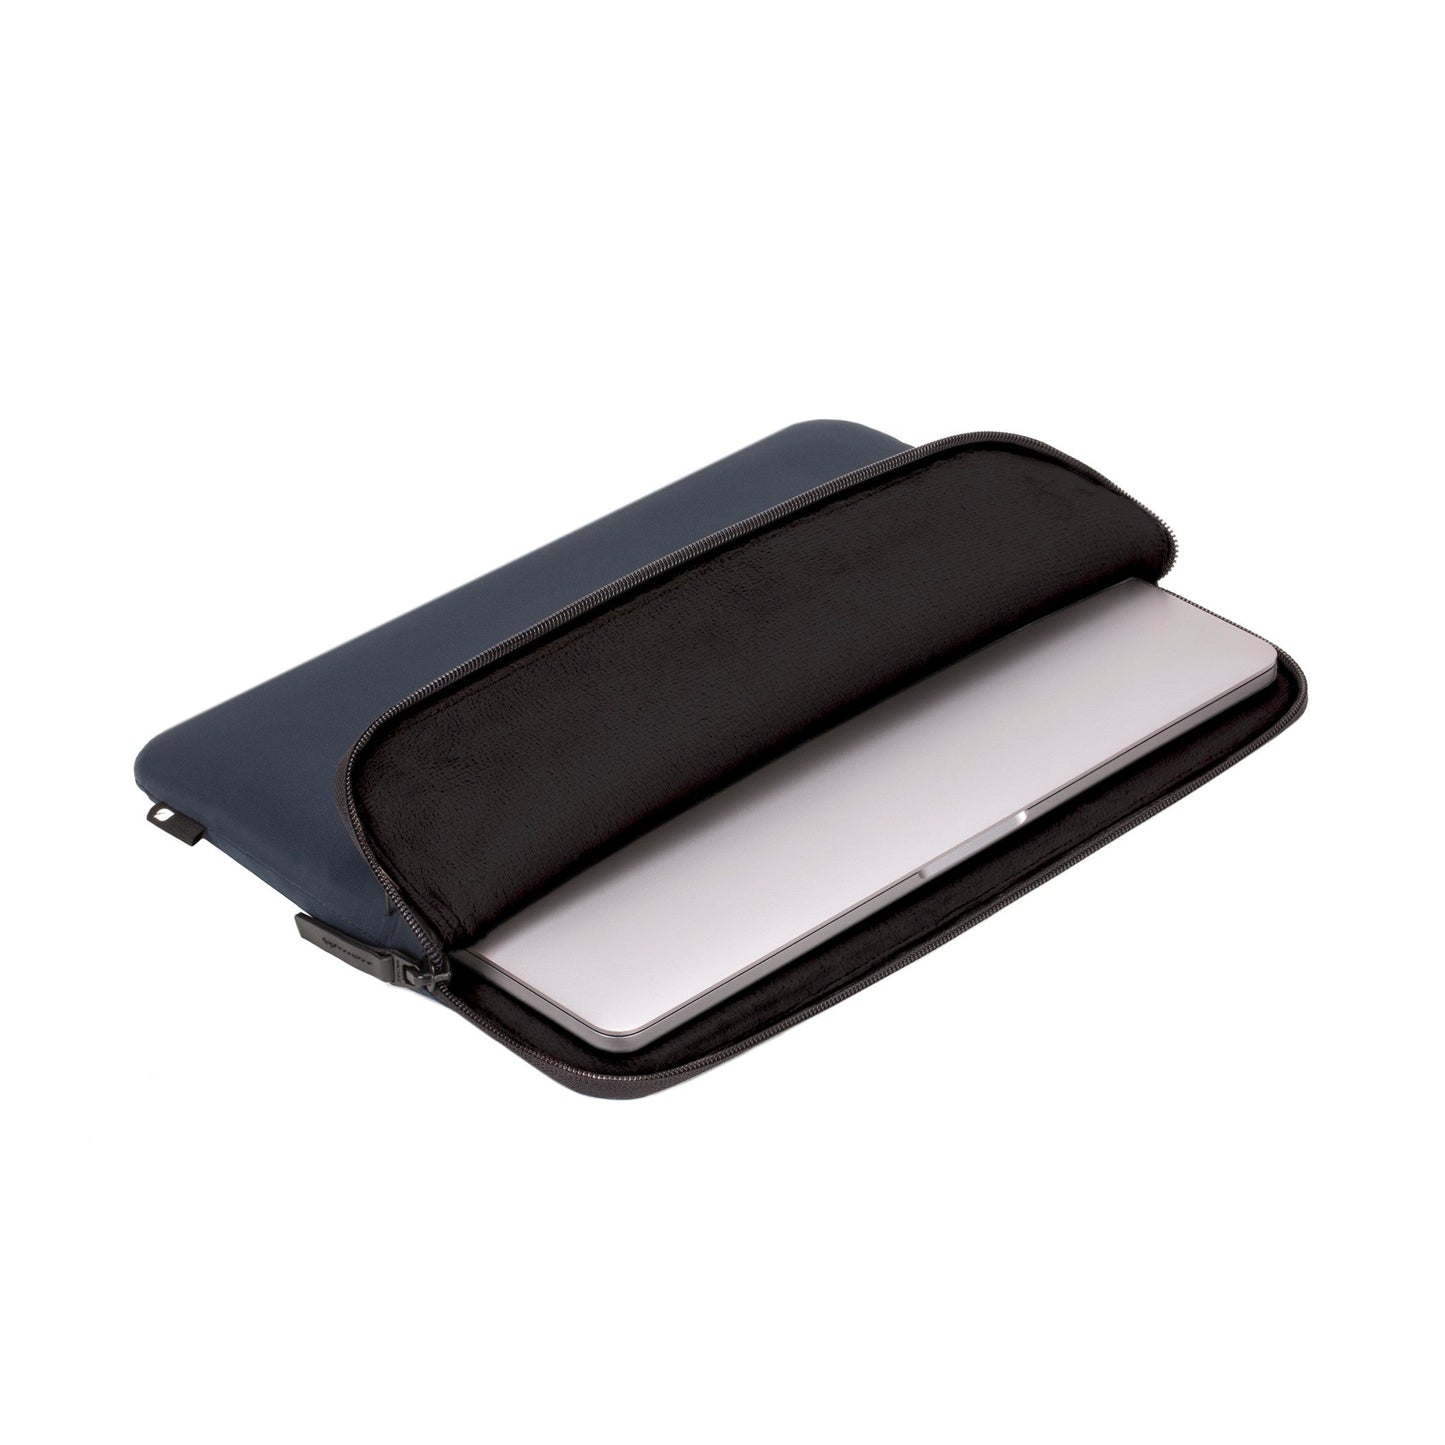 Compact Sleeve in Flight Nylon for  MacBook Pro 14"  -Navy-